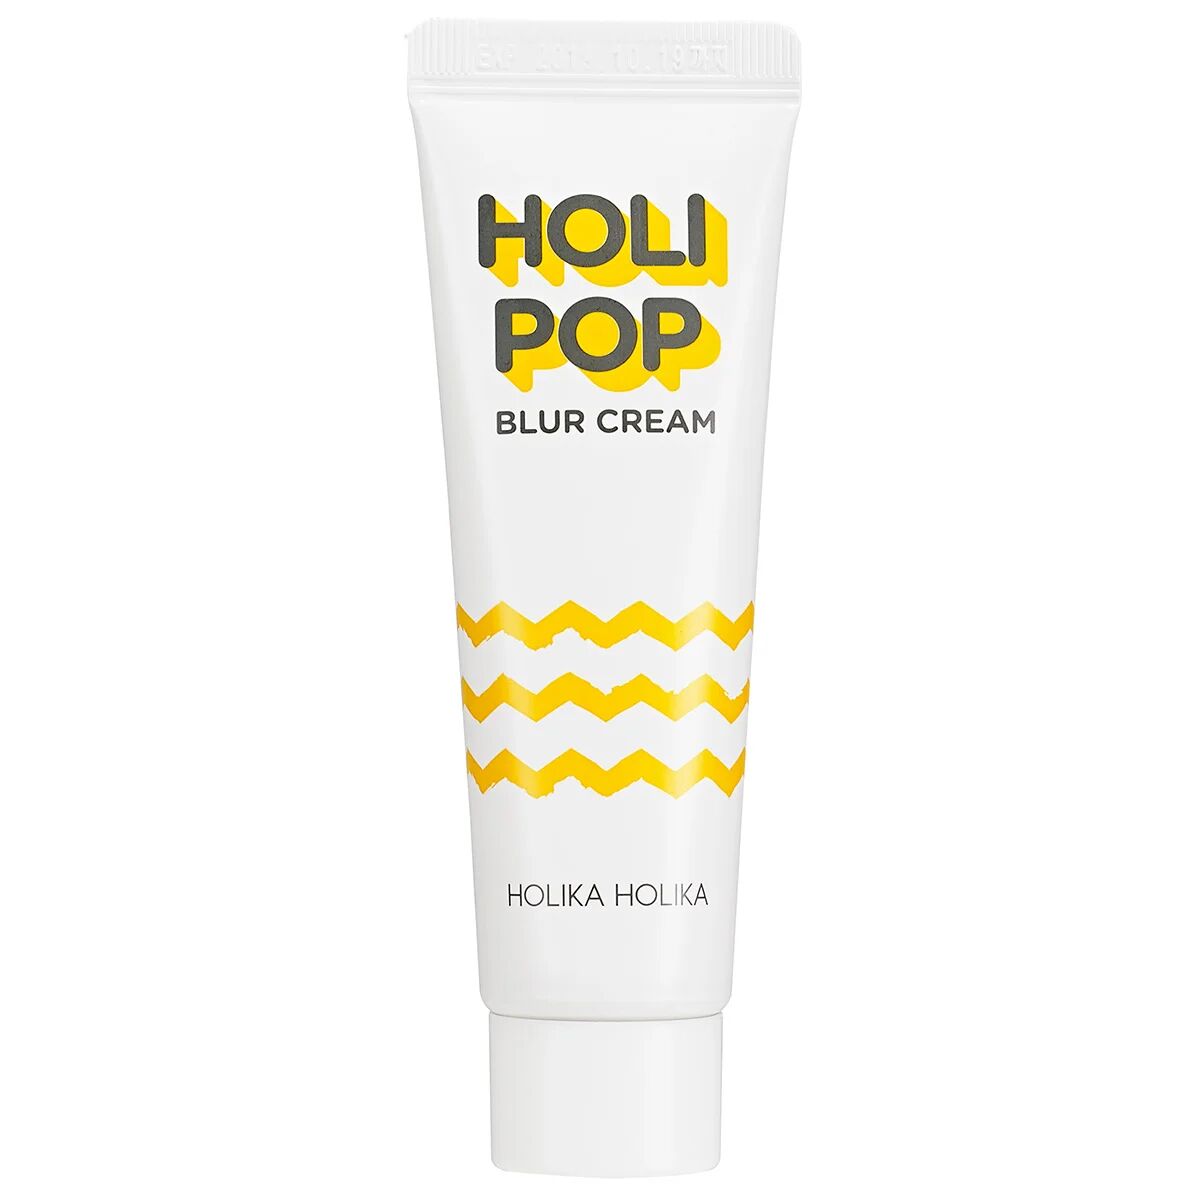 Holika Holika Holi Pop Blur Cream, 30 ml Holika Holika Primer